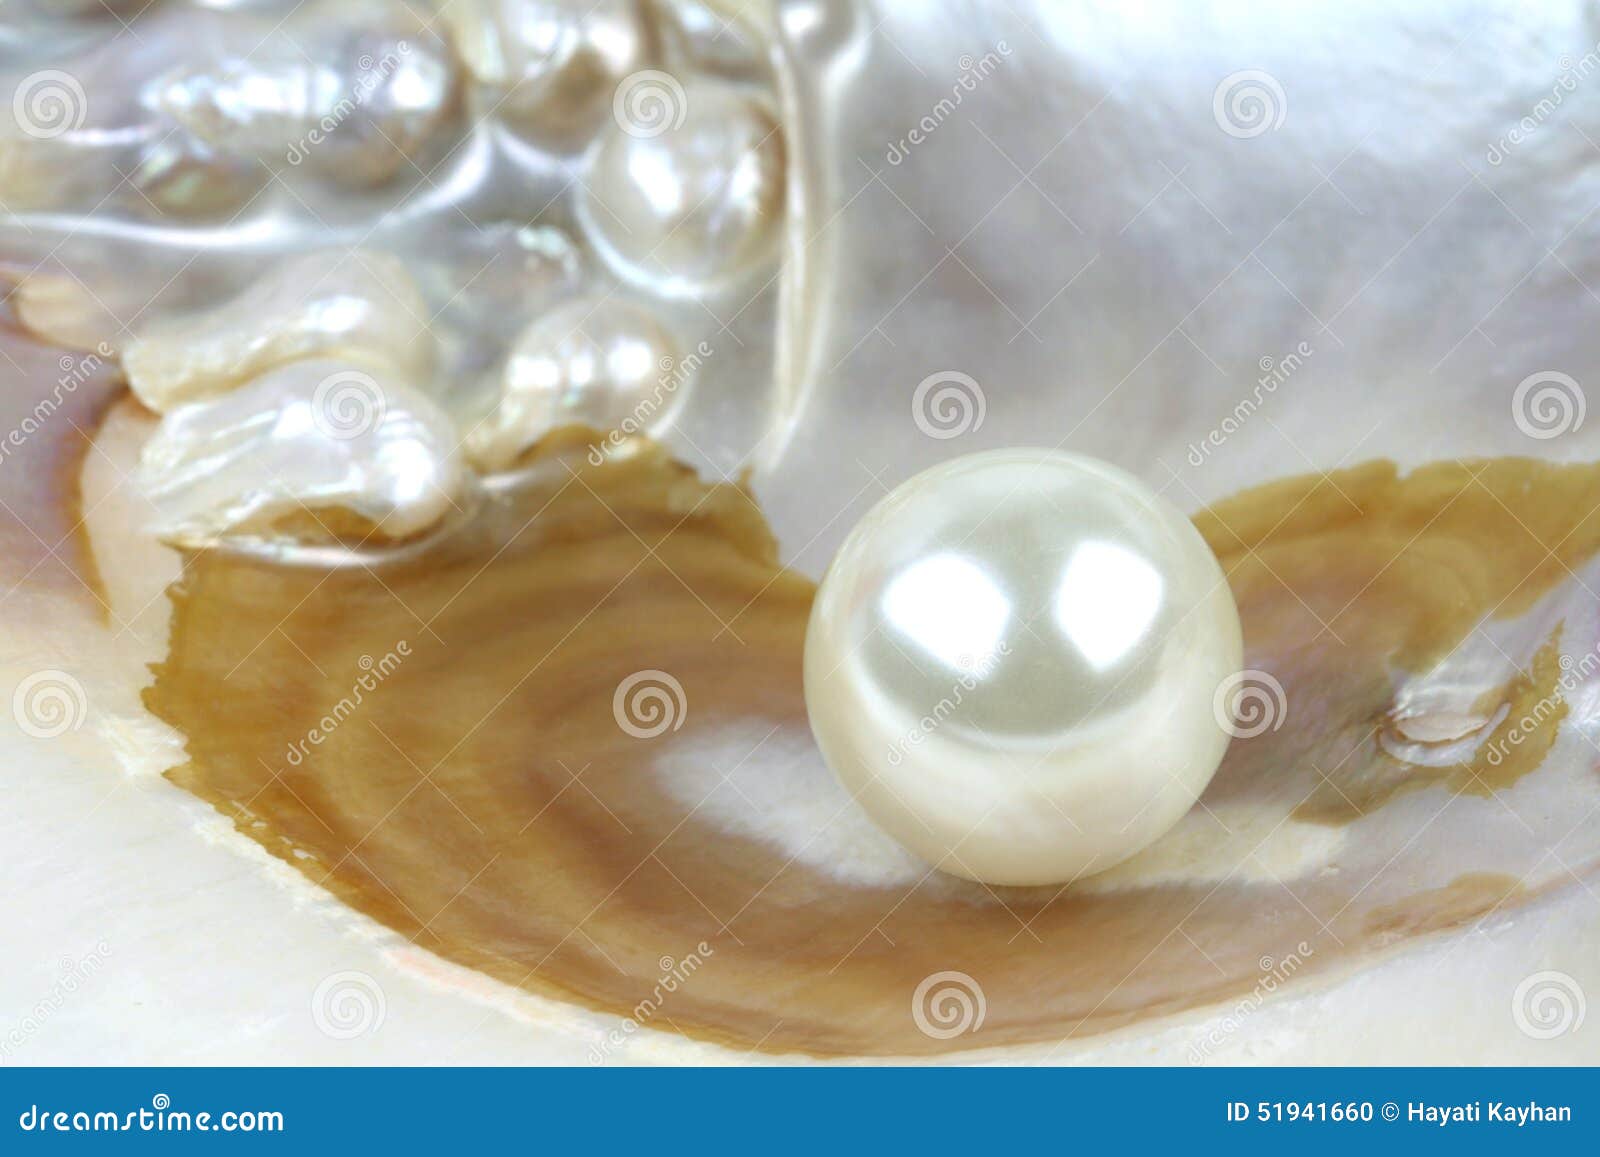 Sea Shell with Real Pearls, Macro Shot Stock Photo - Image of rare